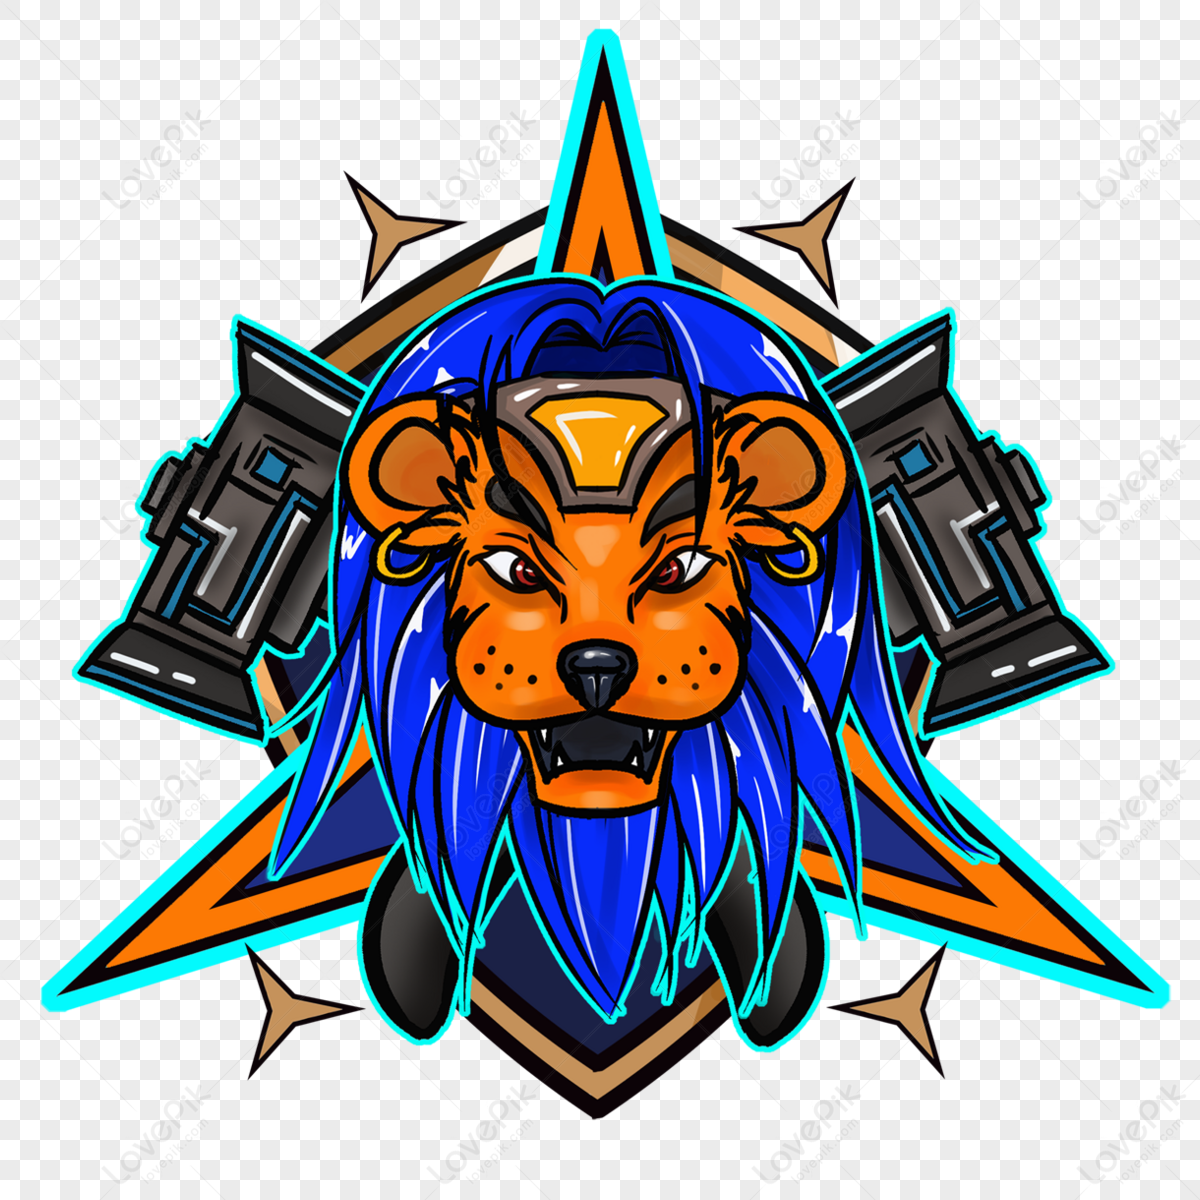 Lion Esport Logo Mascot Design Royalty Free SVG, Cliparts, Vectors, and  Stock Illustration. Image 168479585.